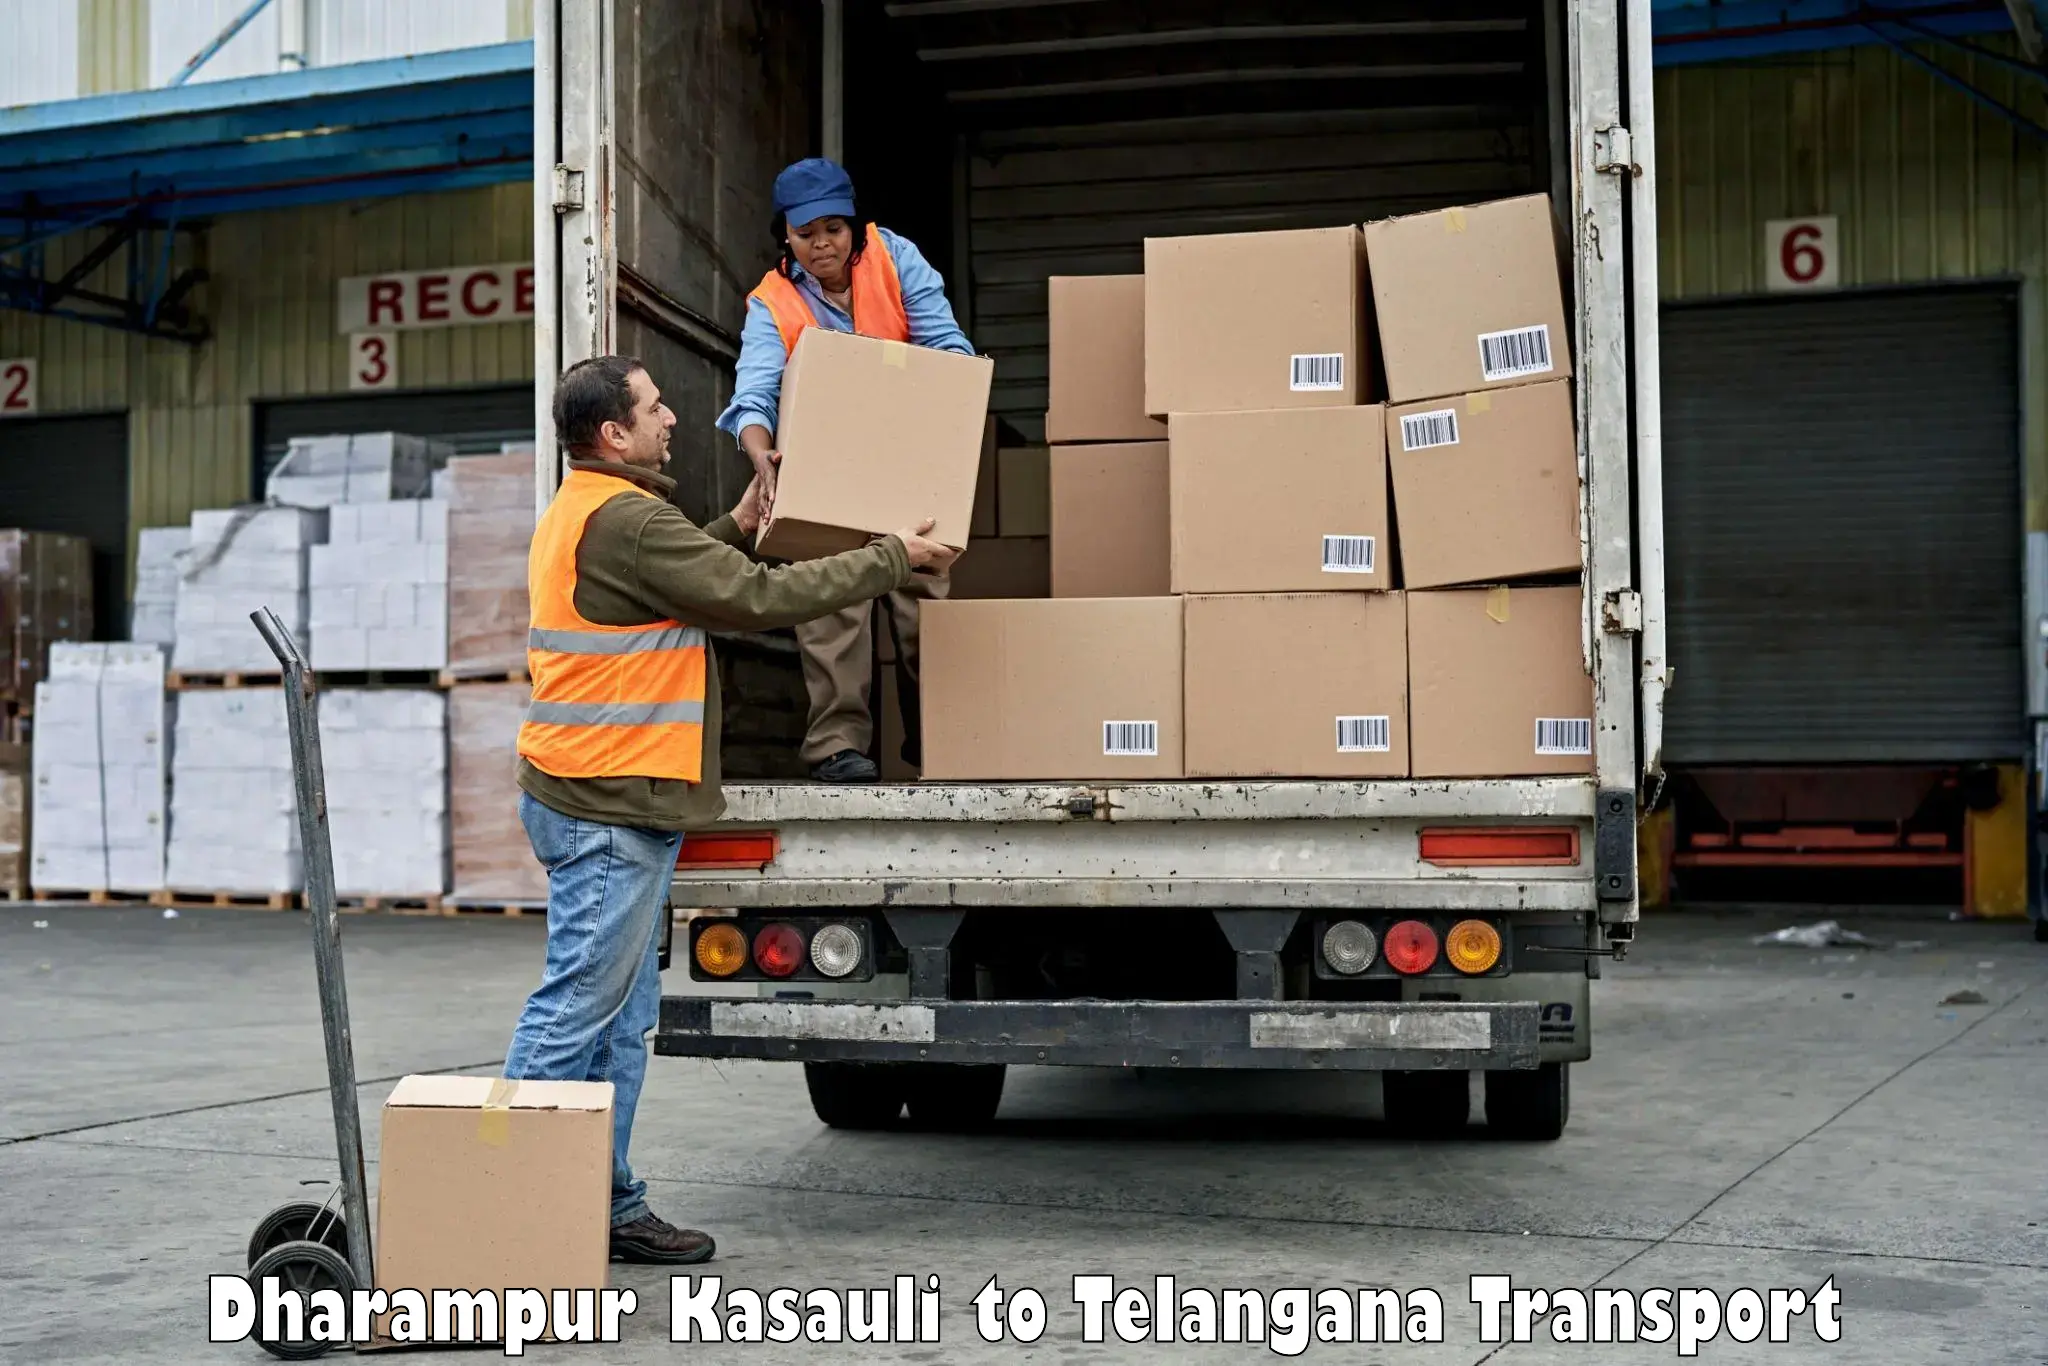 Furniture transport service Dharampur Kasauli to Hyderabad